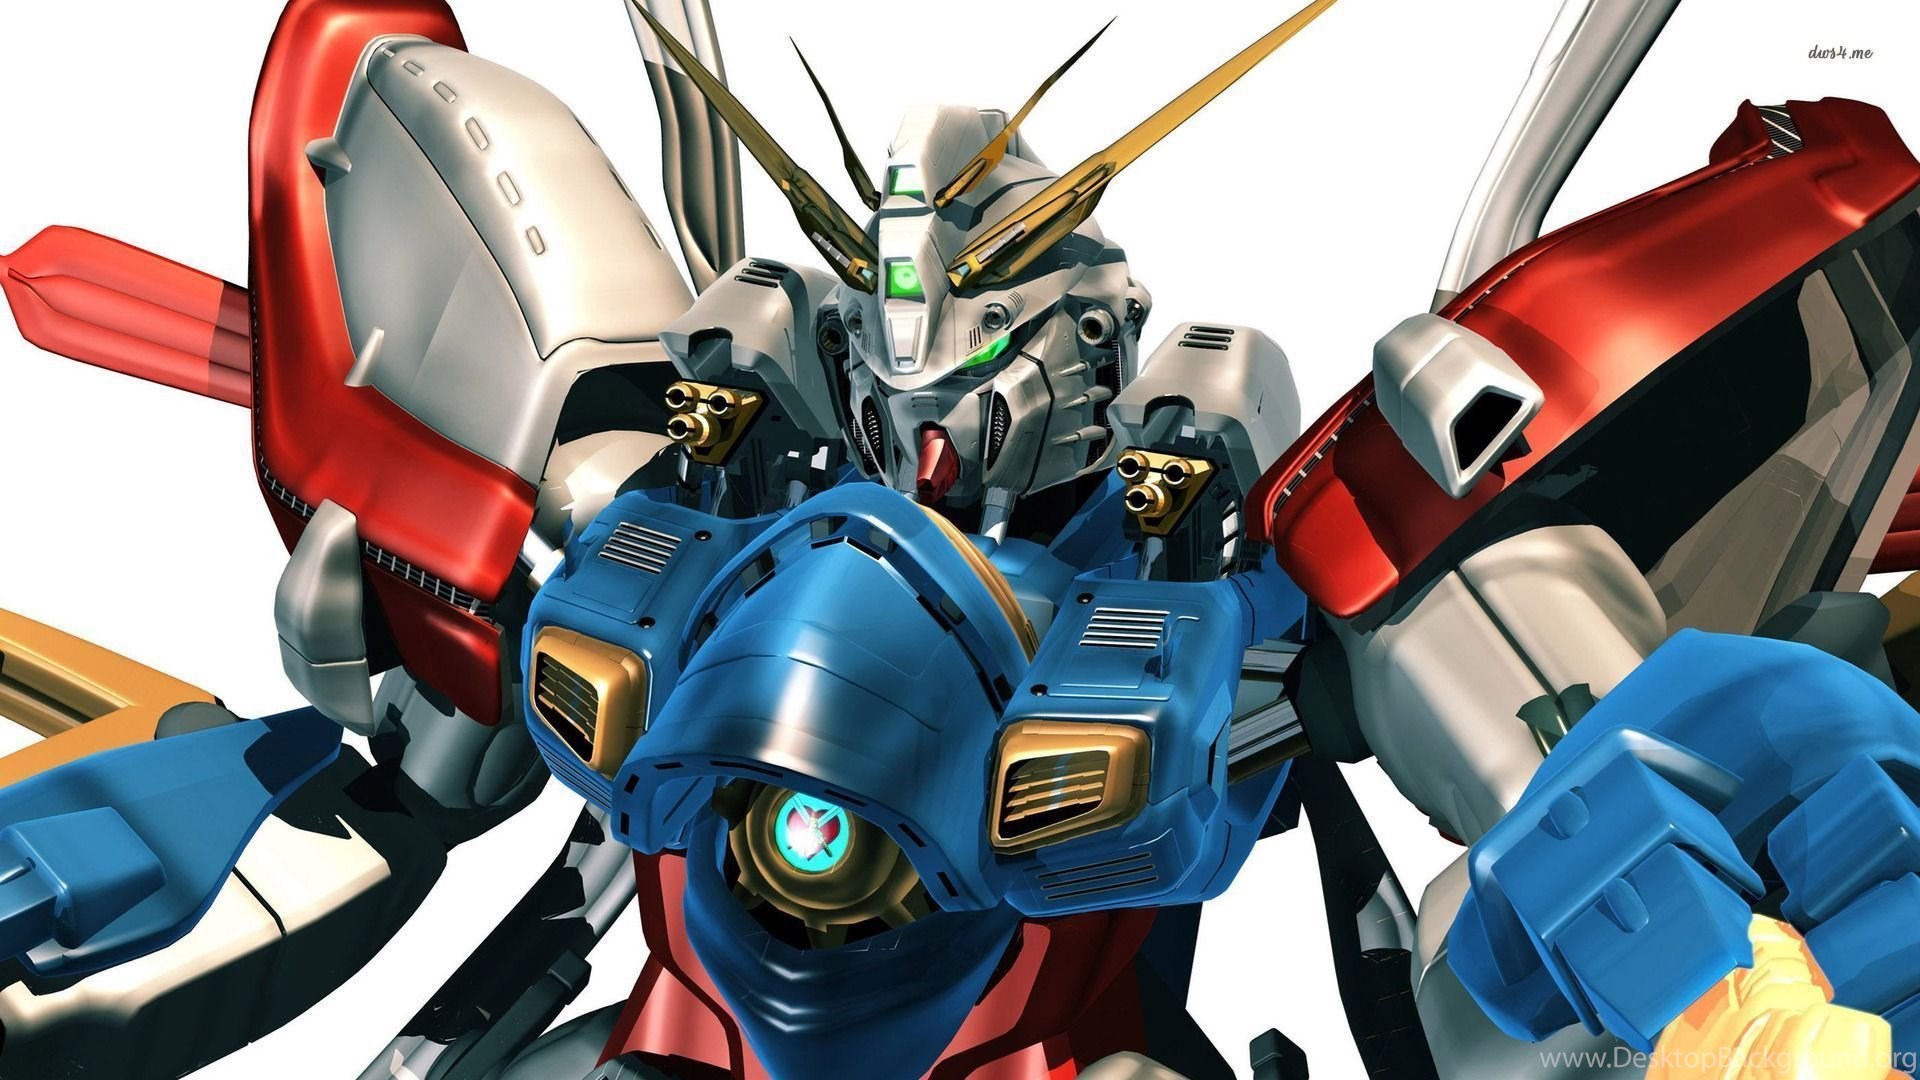  Gundam  Wallpapers  Anime Wallpapers  Desktop Background